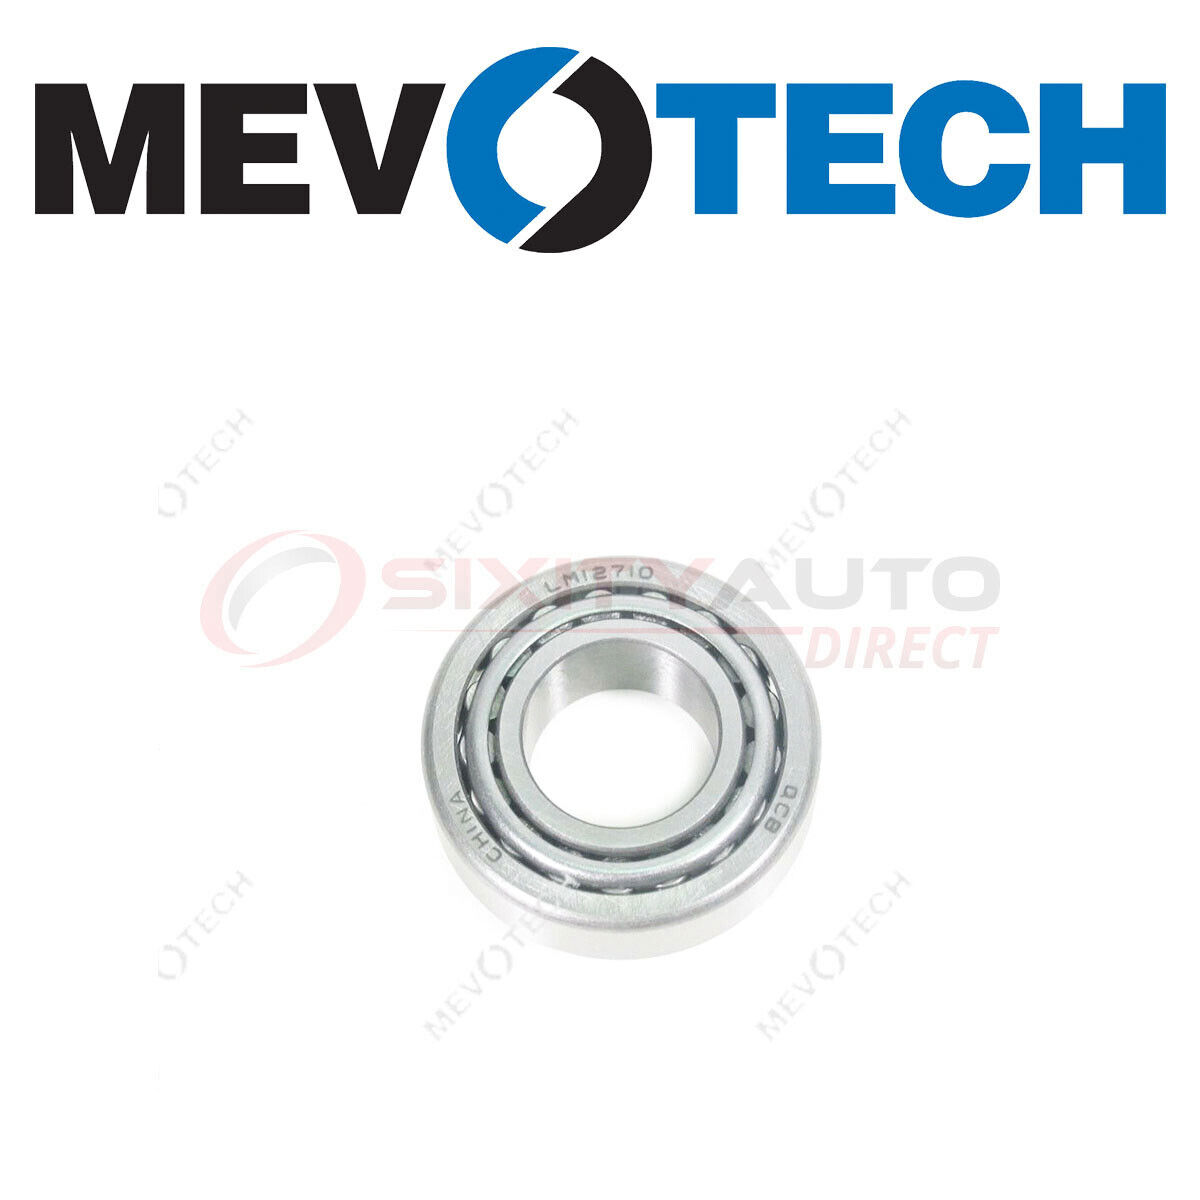 Mevotech Wheel Bearing for 1984-1990 Mercury Topaz 2.0L 2.3L L4 - Axle Hub lq